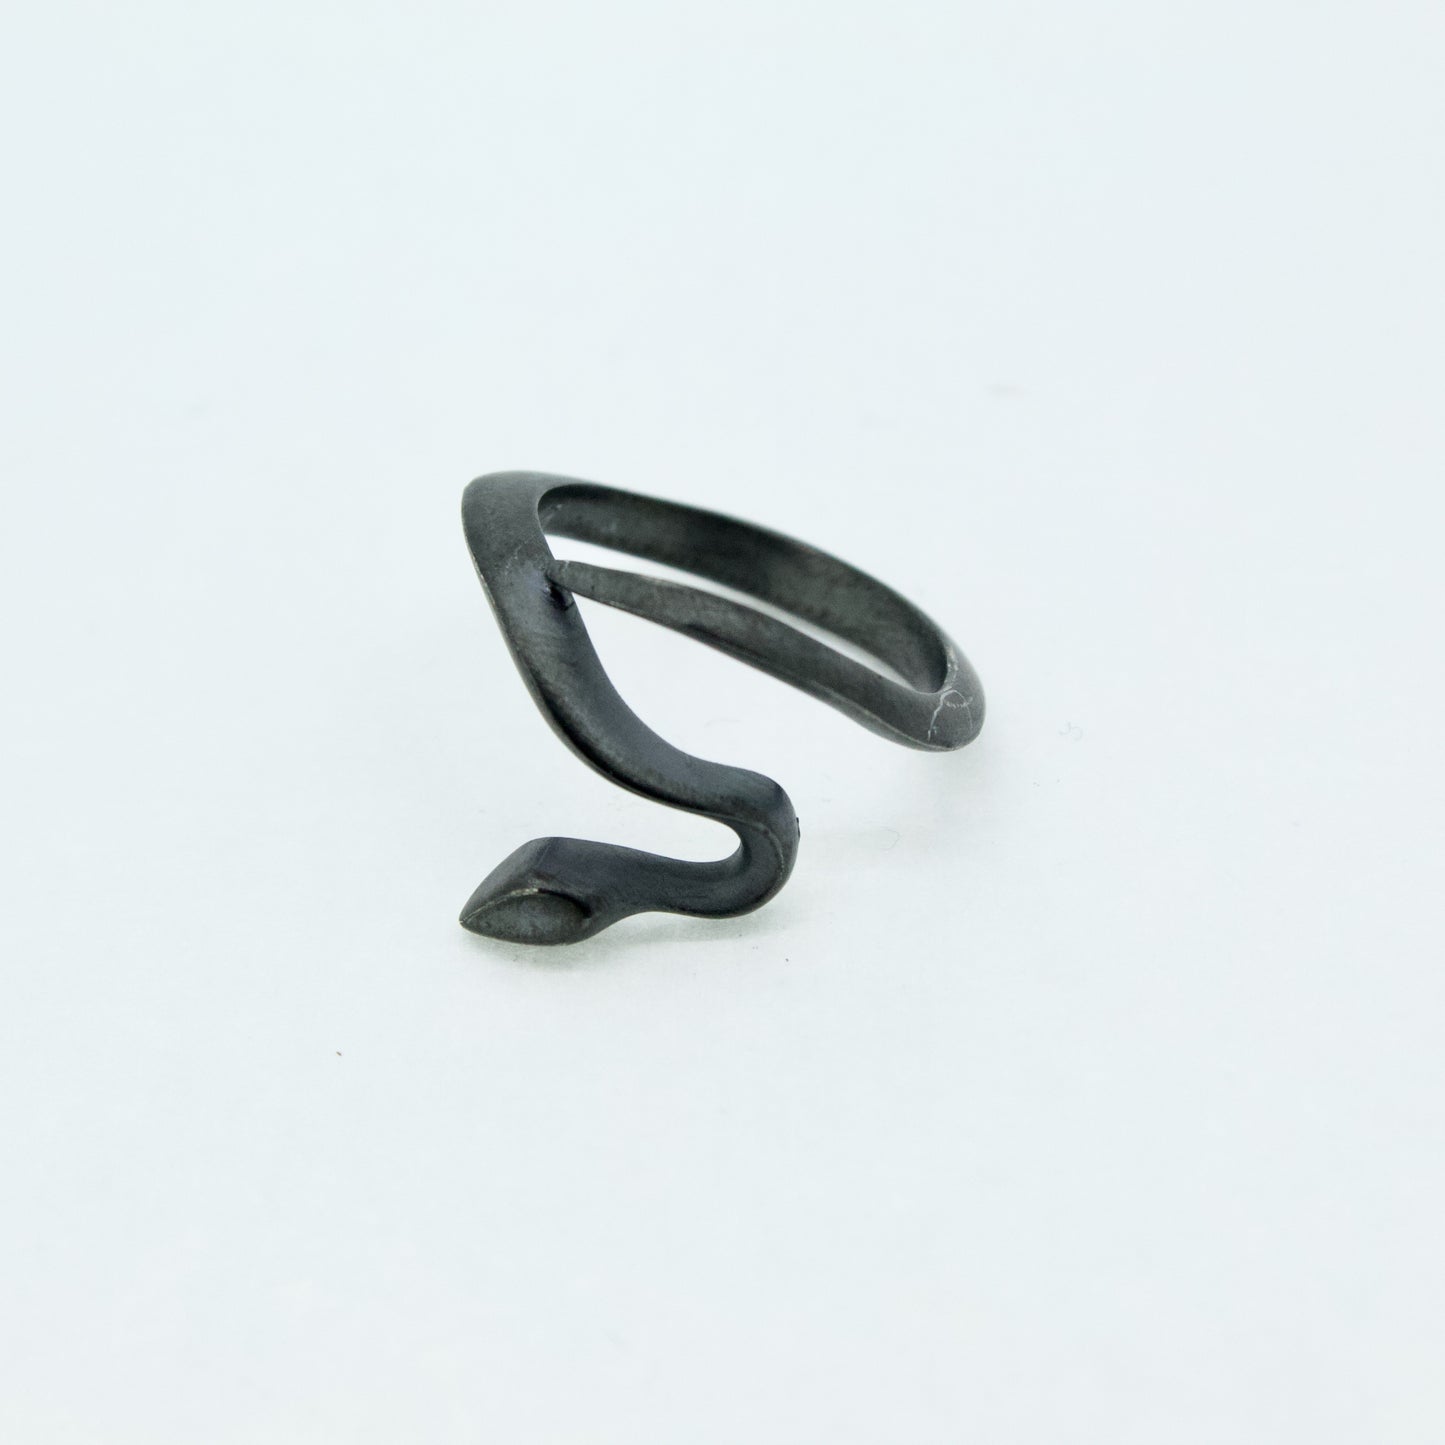 'Schlangenring' Snake Ring - Oxidised